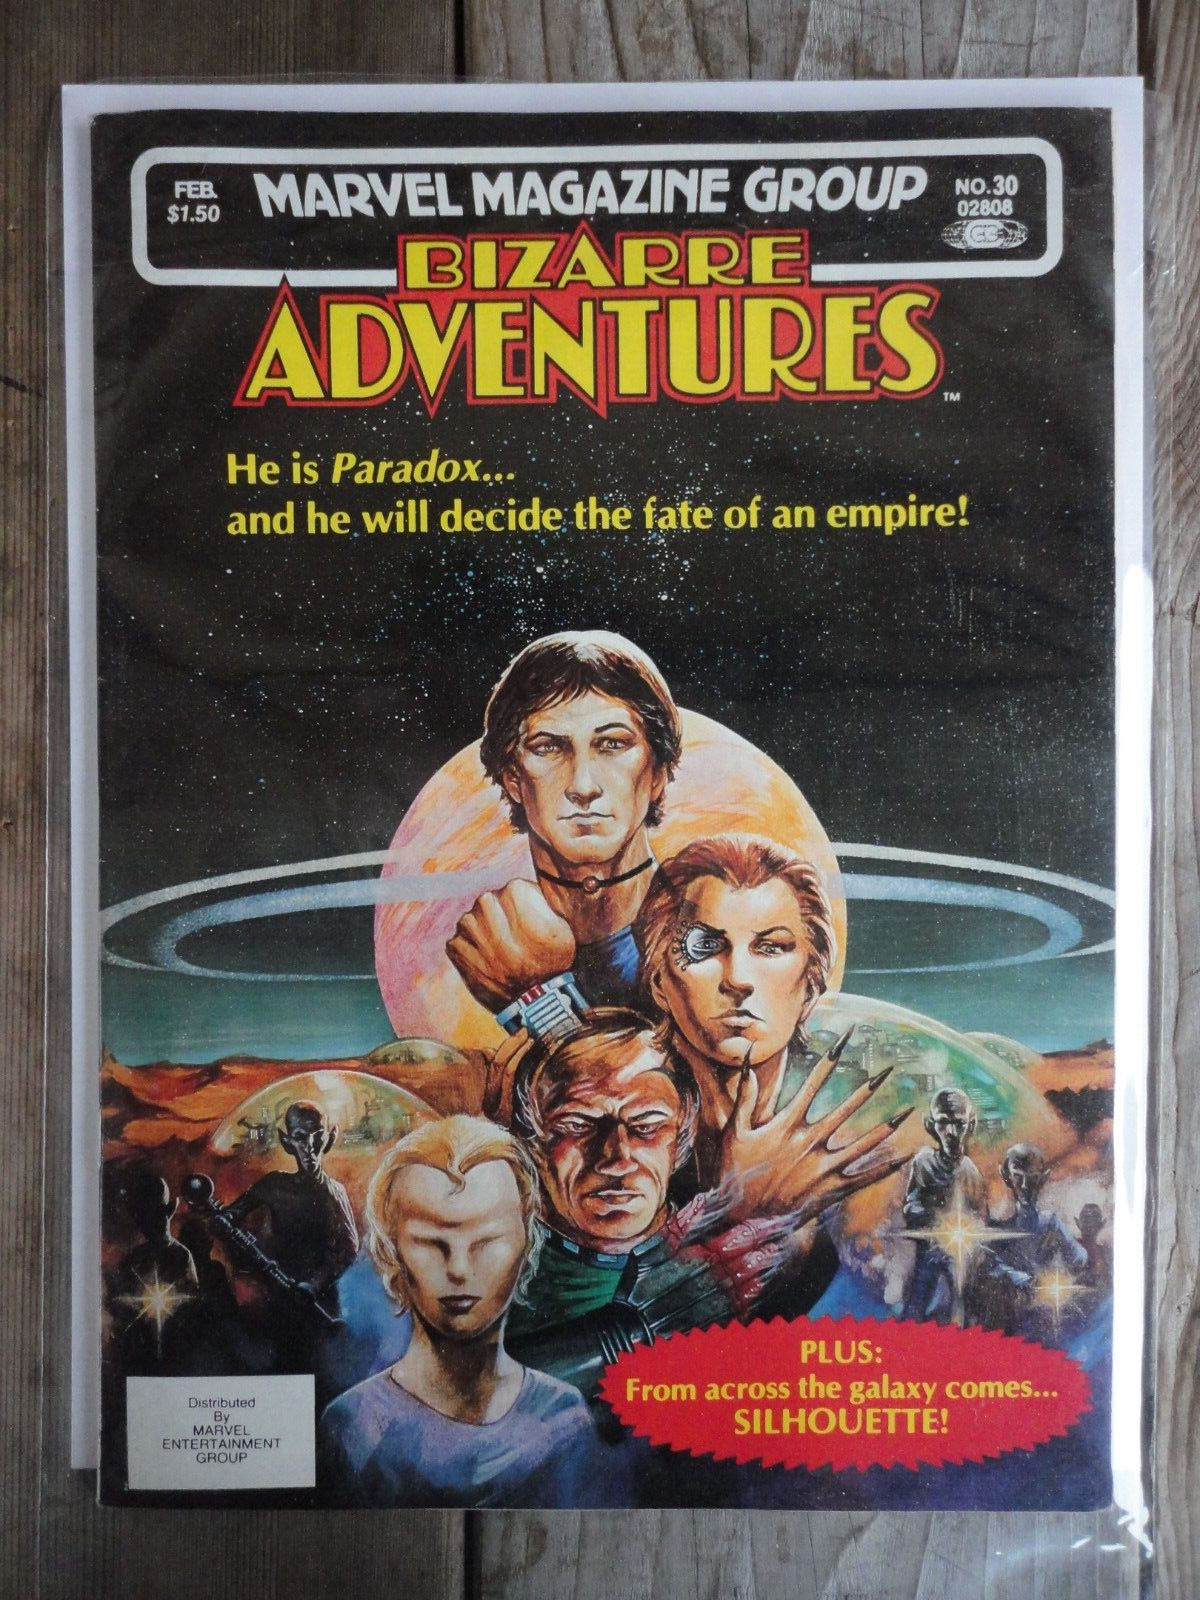 Bizarre Adventures by Marvel Magazine Group Feb. 1982 vol. 1 N0. 30